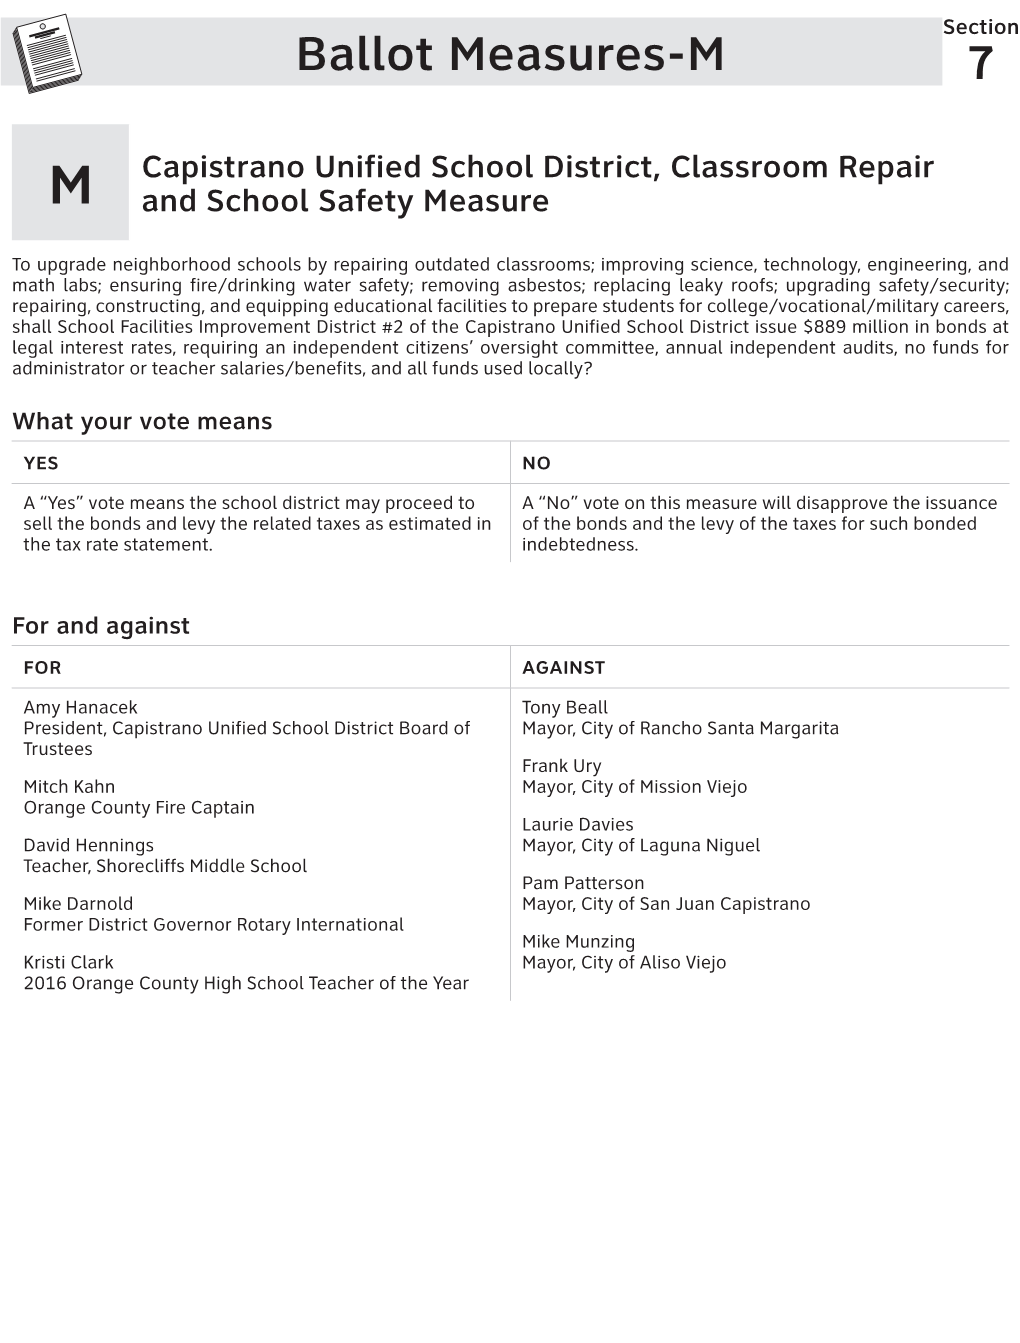 Measure M: Capistrano Unified School District, Classroom Repair